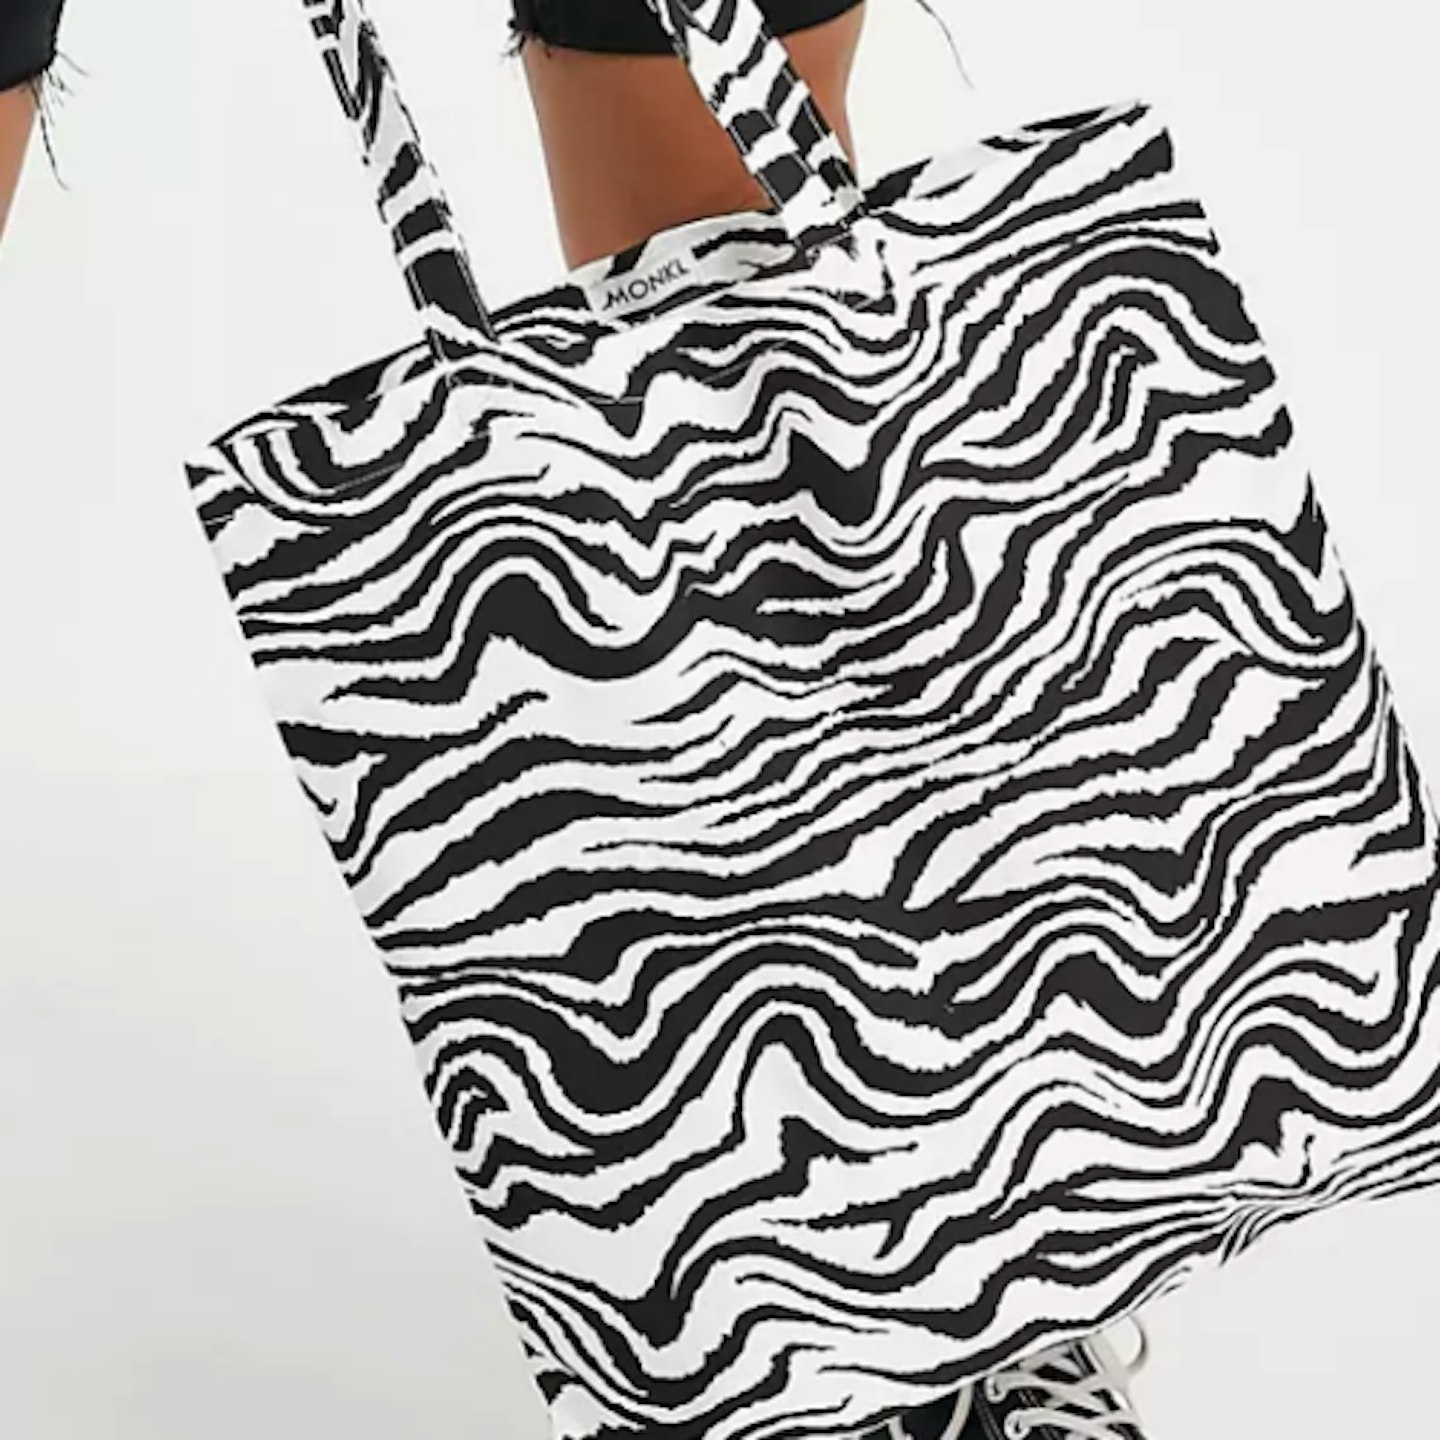 Zebra print tote bag on white background